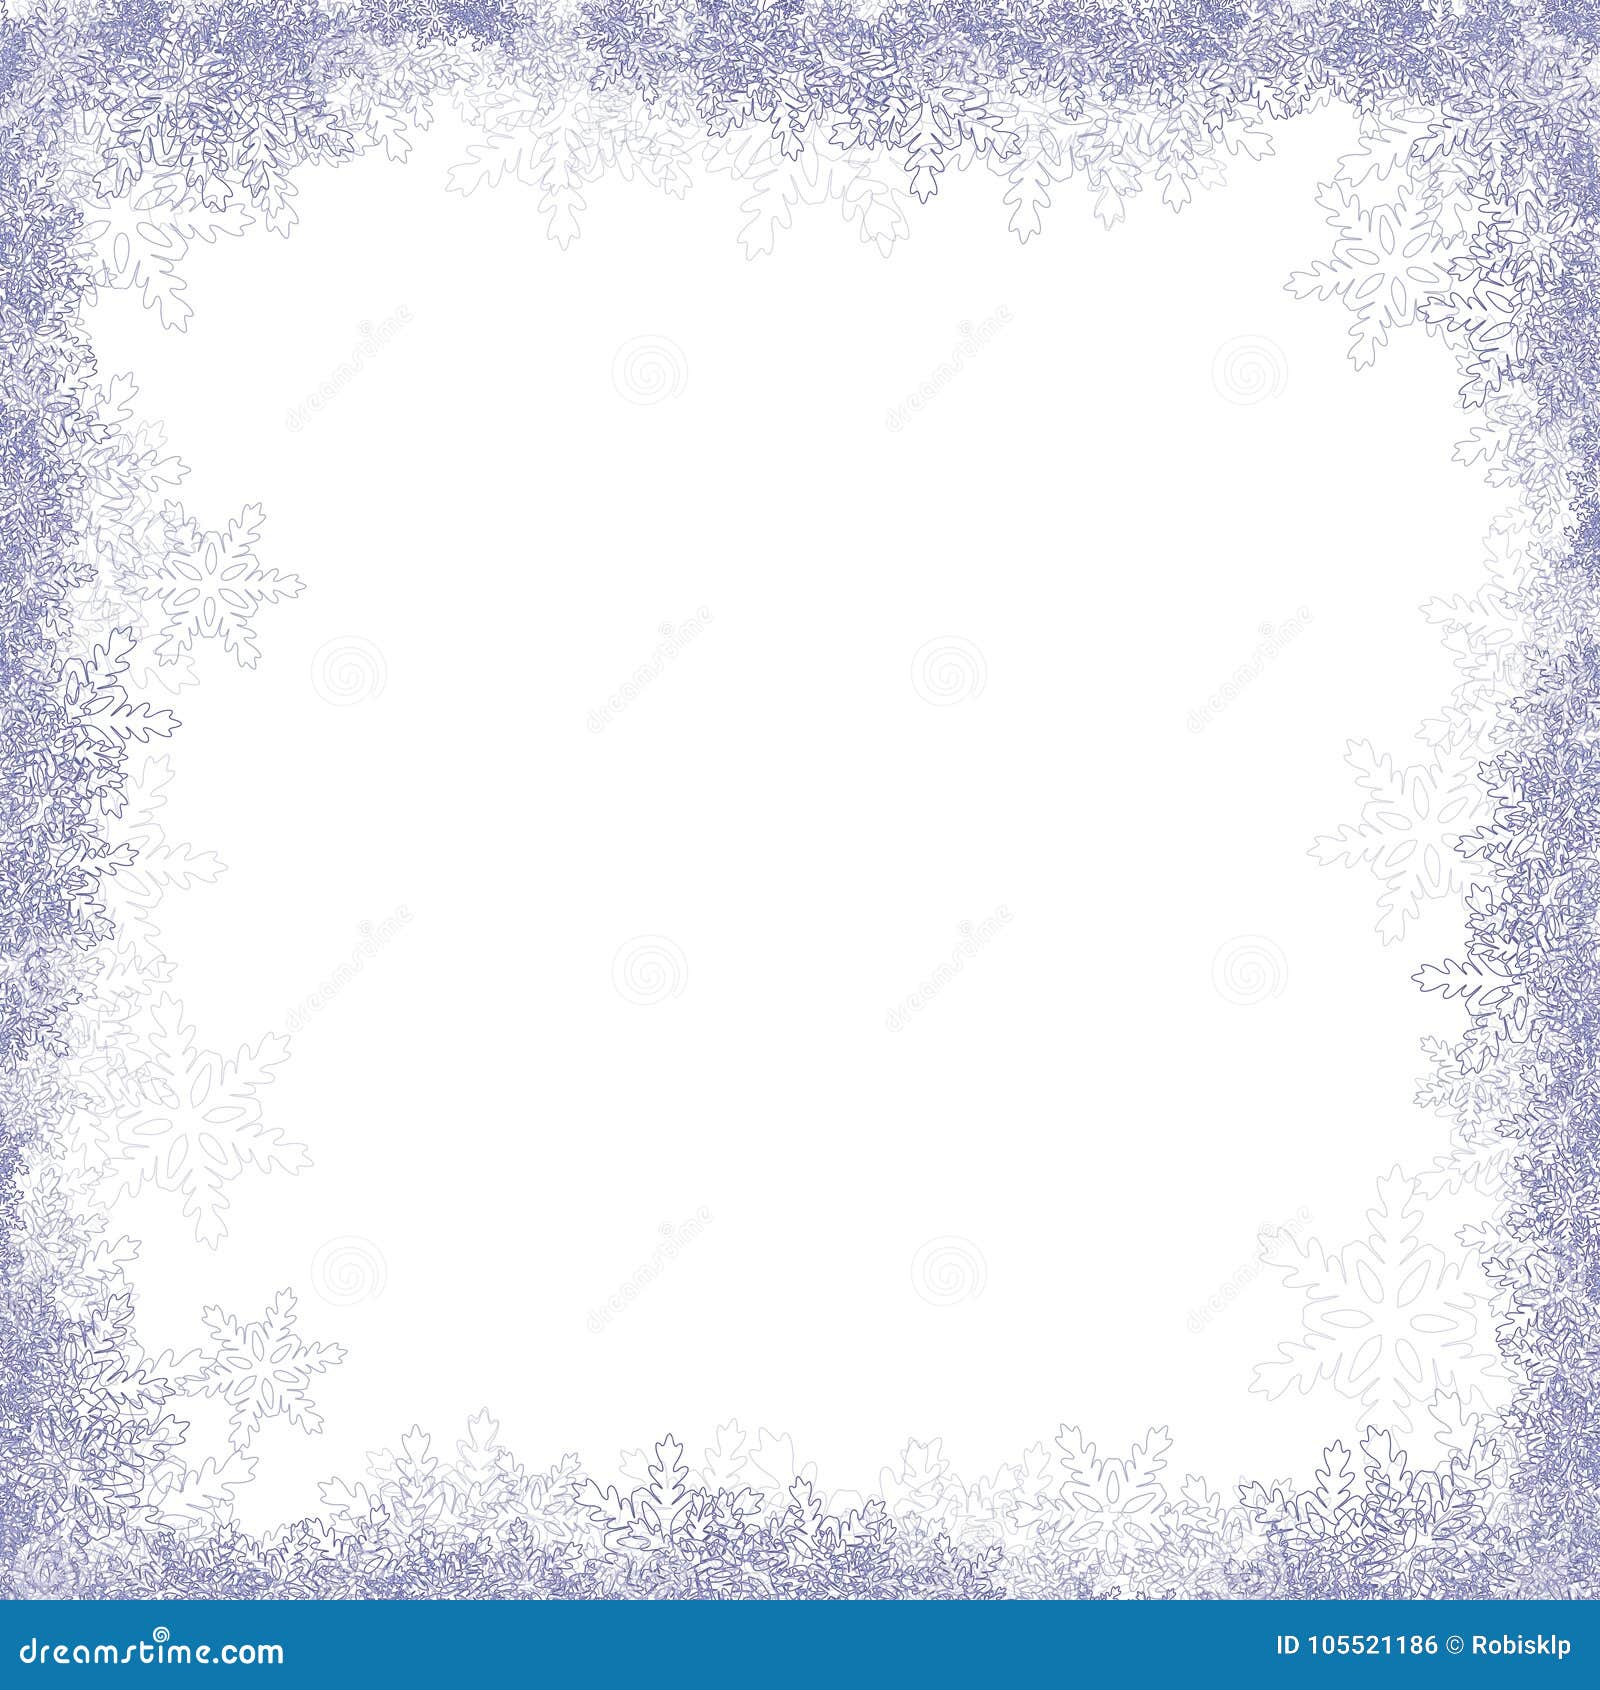 Download Snowflake Border Vector - .snowflake vector, snowflake ...